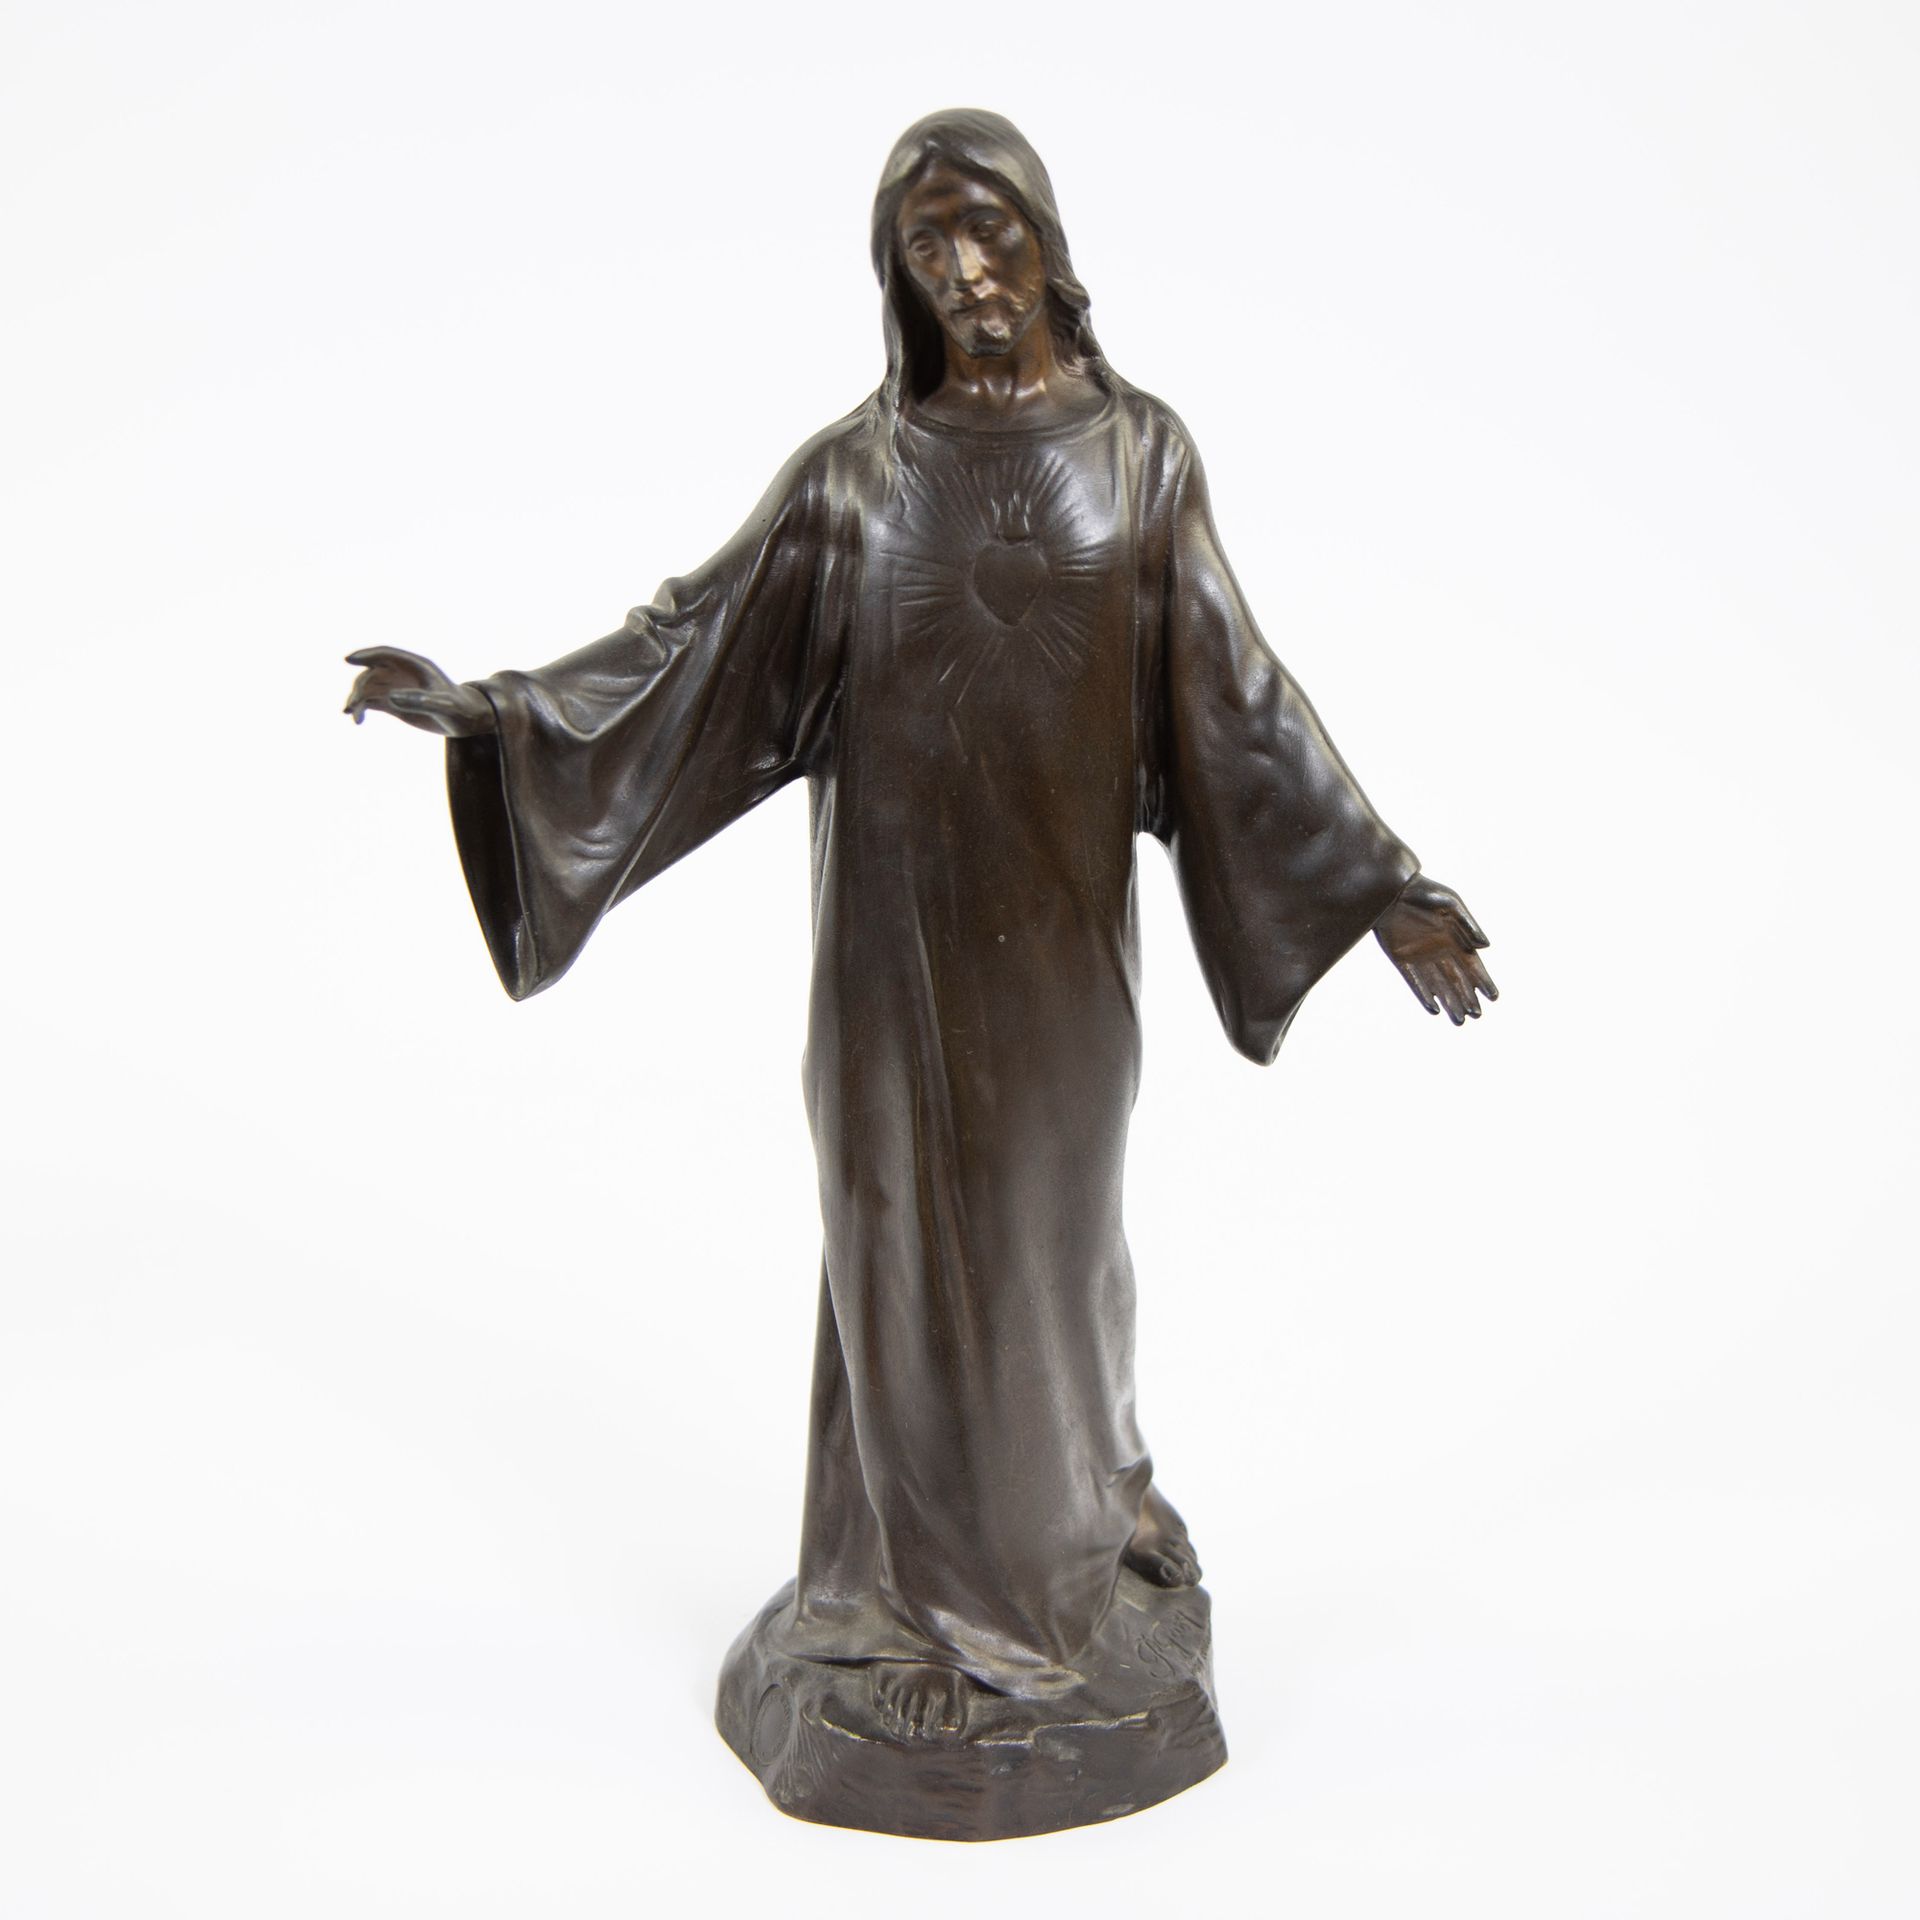 Paul GASQ (1860-1944) 保罗-加斯科(1860-1944)
基督的青铜雕塑，签名并标明Hors Concours

基督青铜雕塑，签名并标明&hellip;